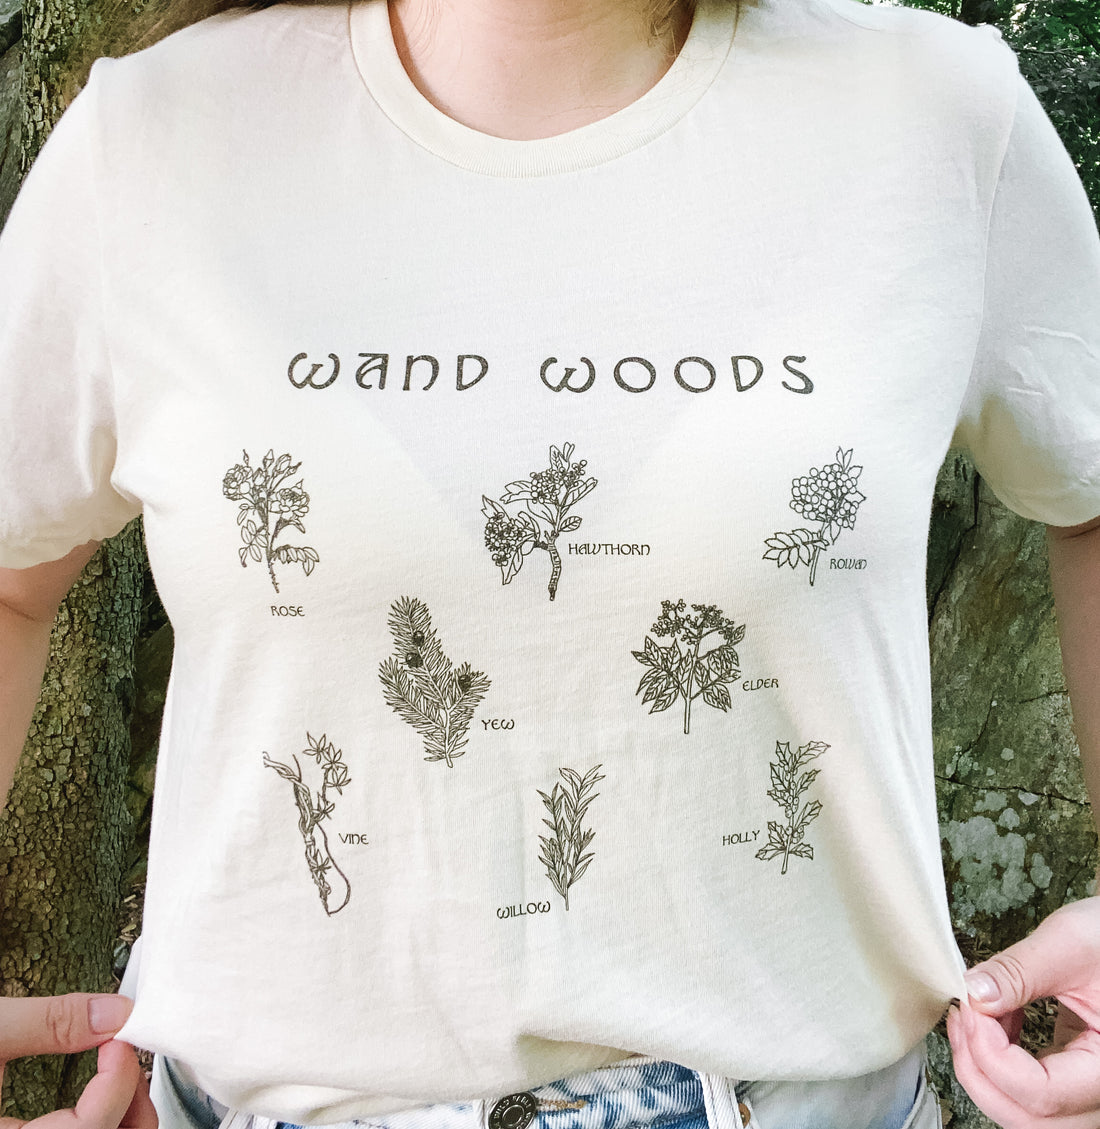 Wand Woods Tee